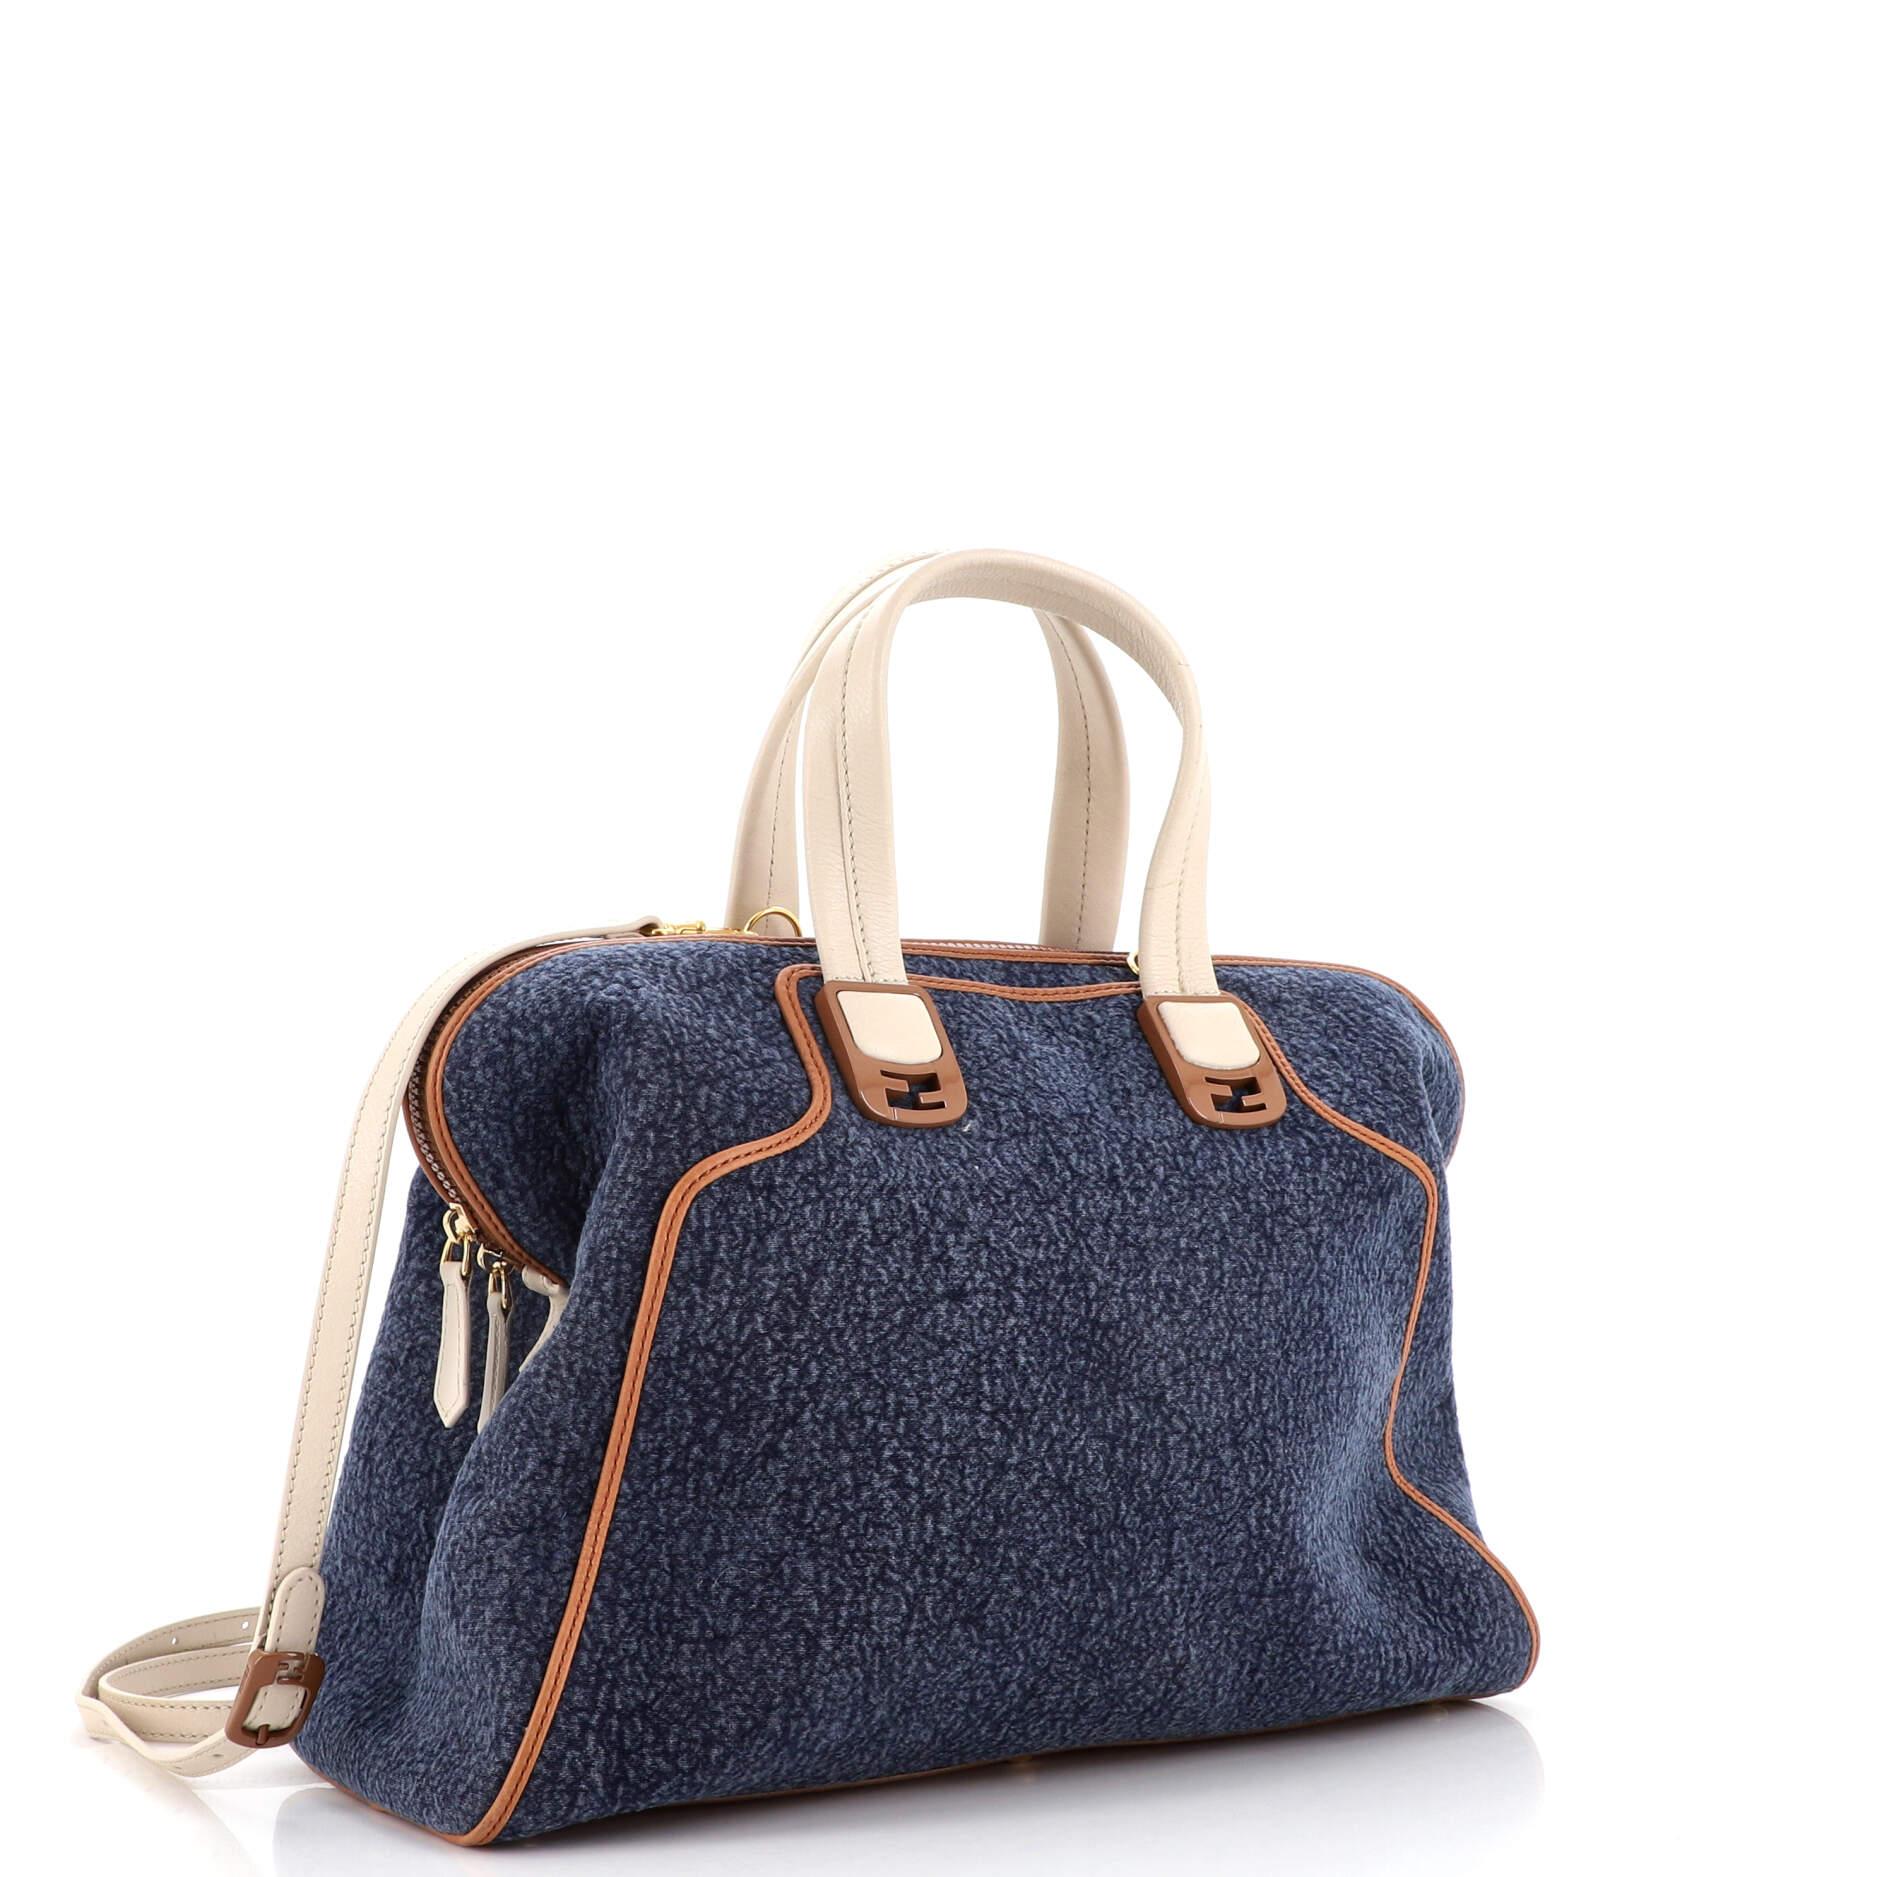 Denim Satchel Handbags - 7 For Sale on 1stDibs